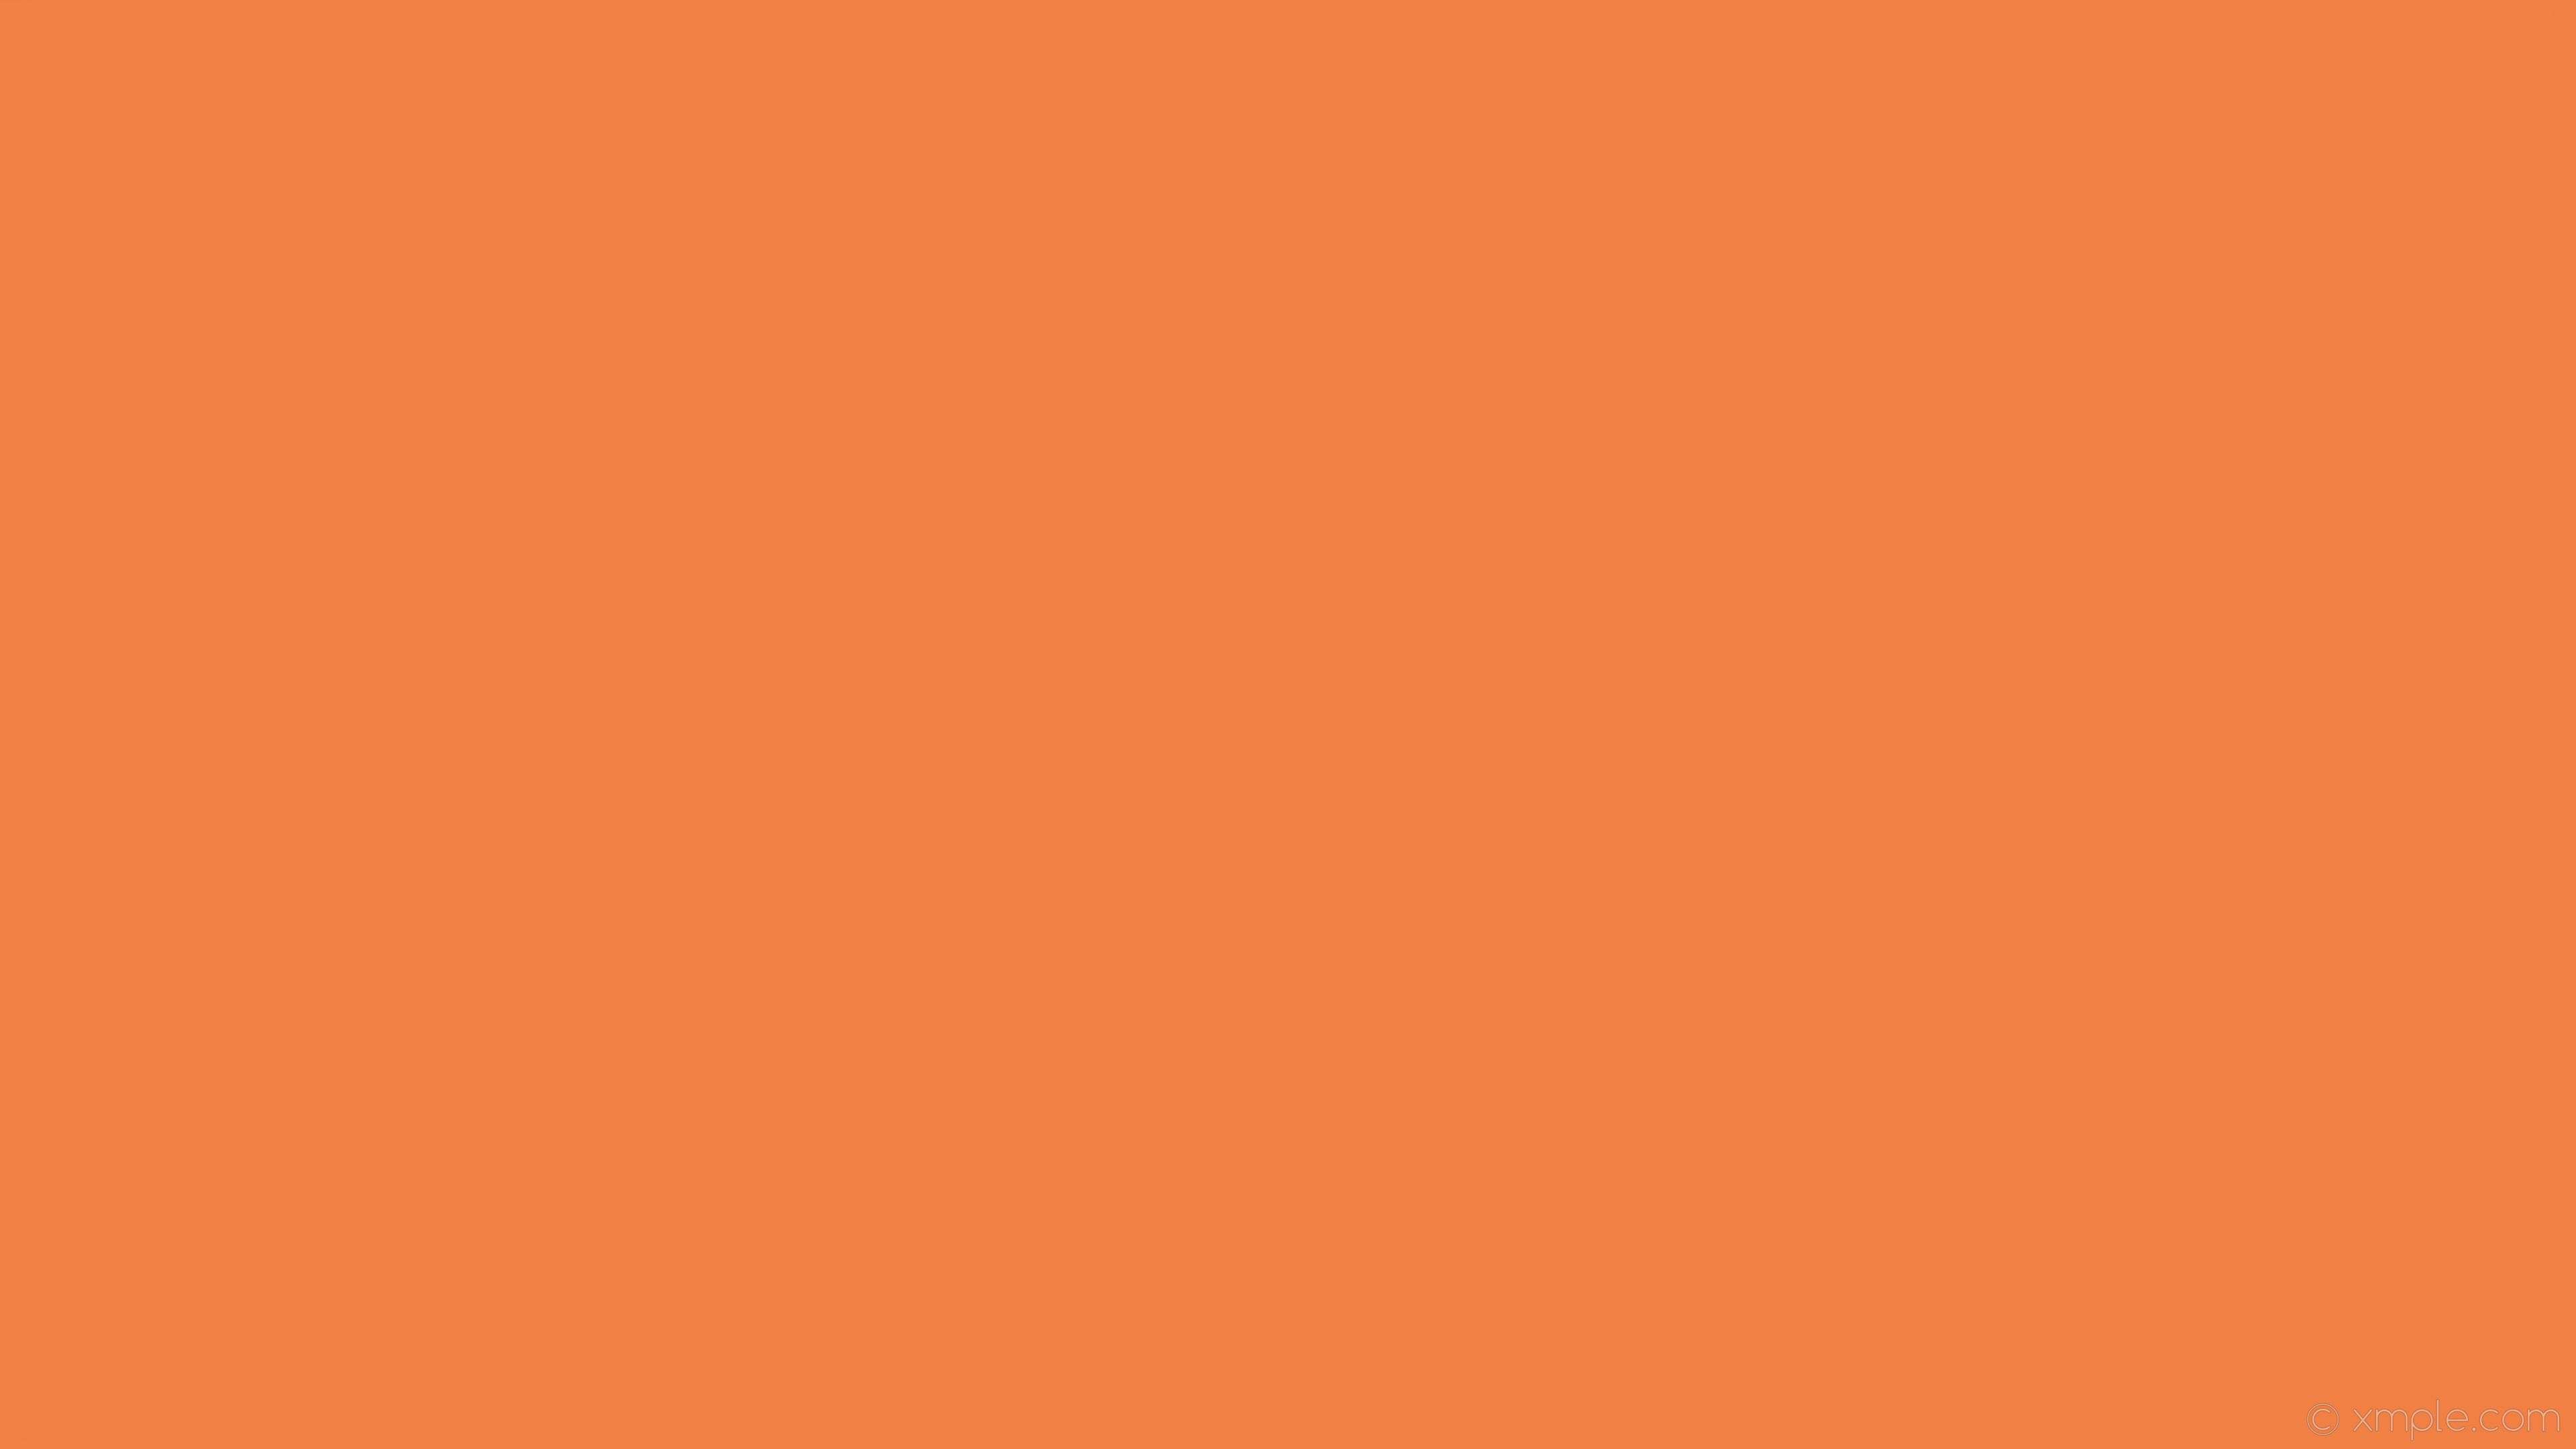 White Orange Background Soft Orange Gradient Stock Illustration 1423499363   Shutterstock